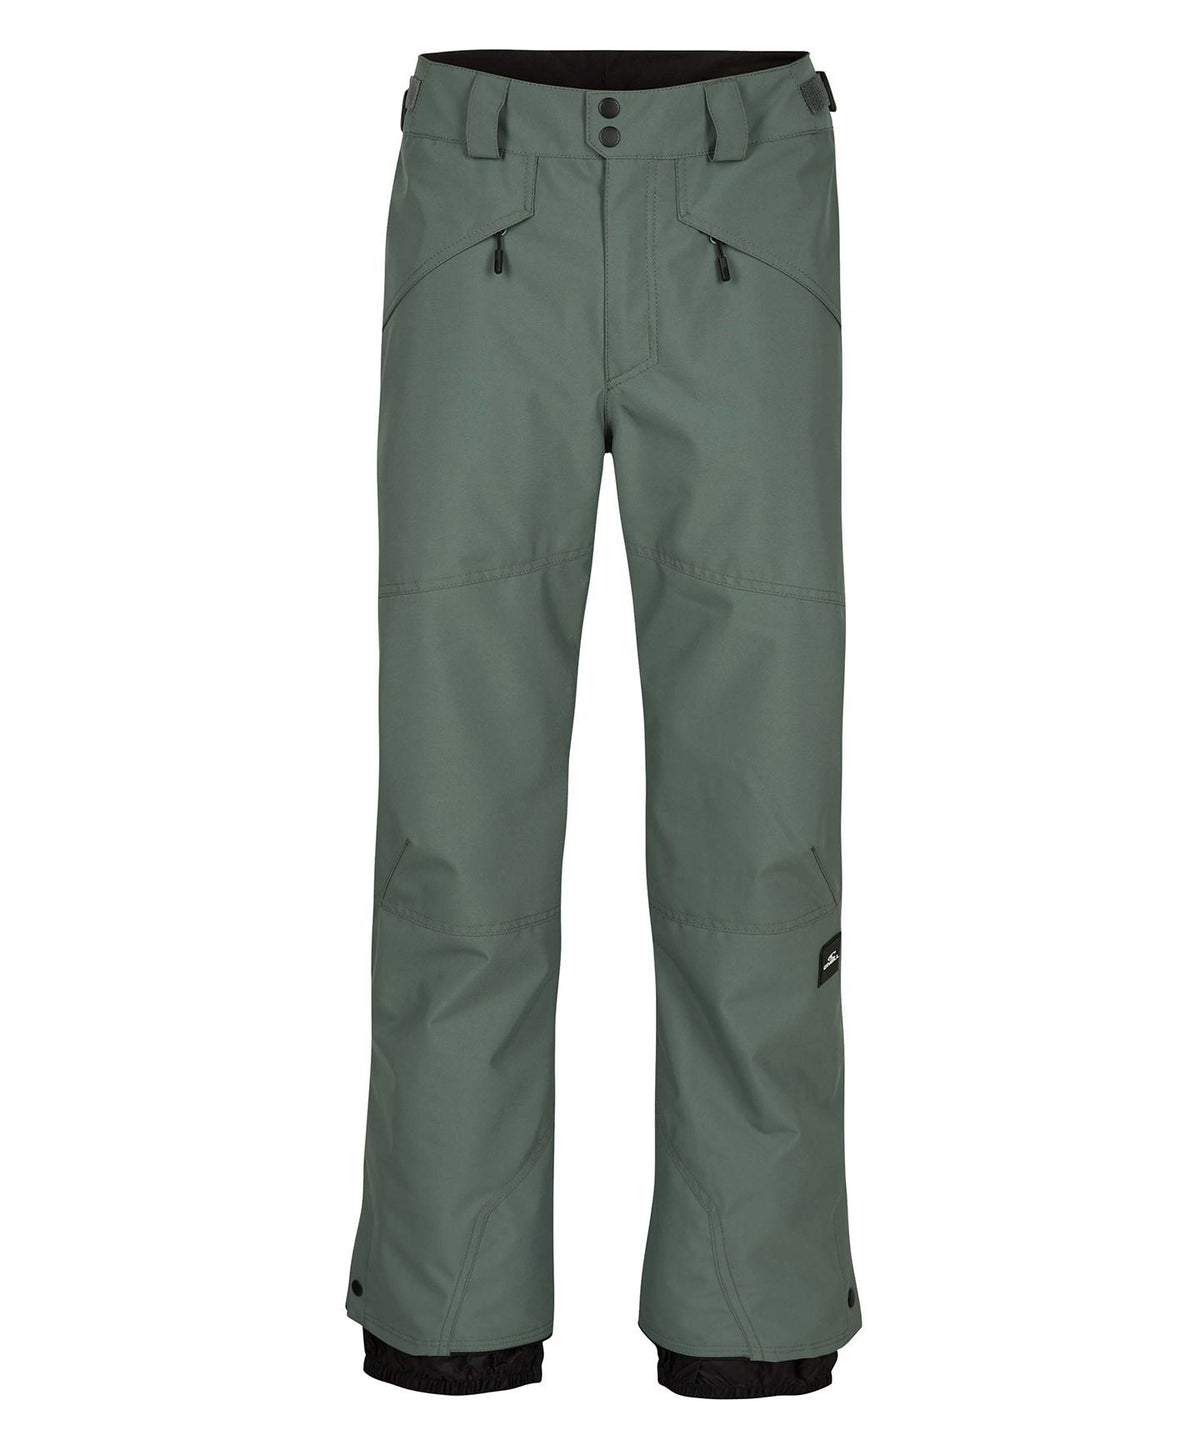 Men's Hammer Insulated Snow Pants - Balsam Green